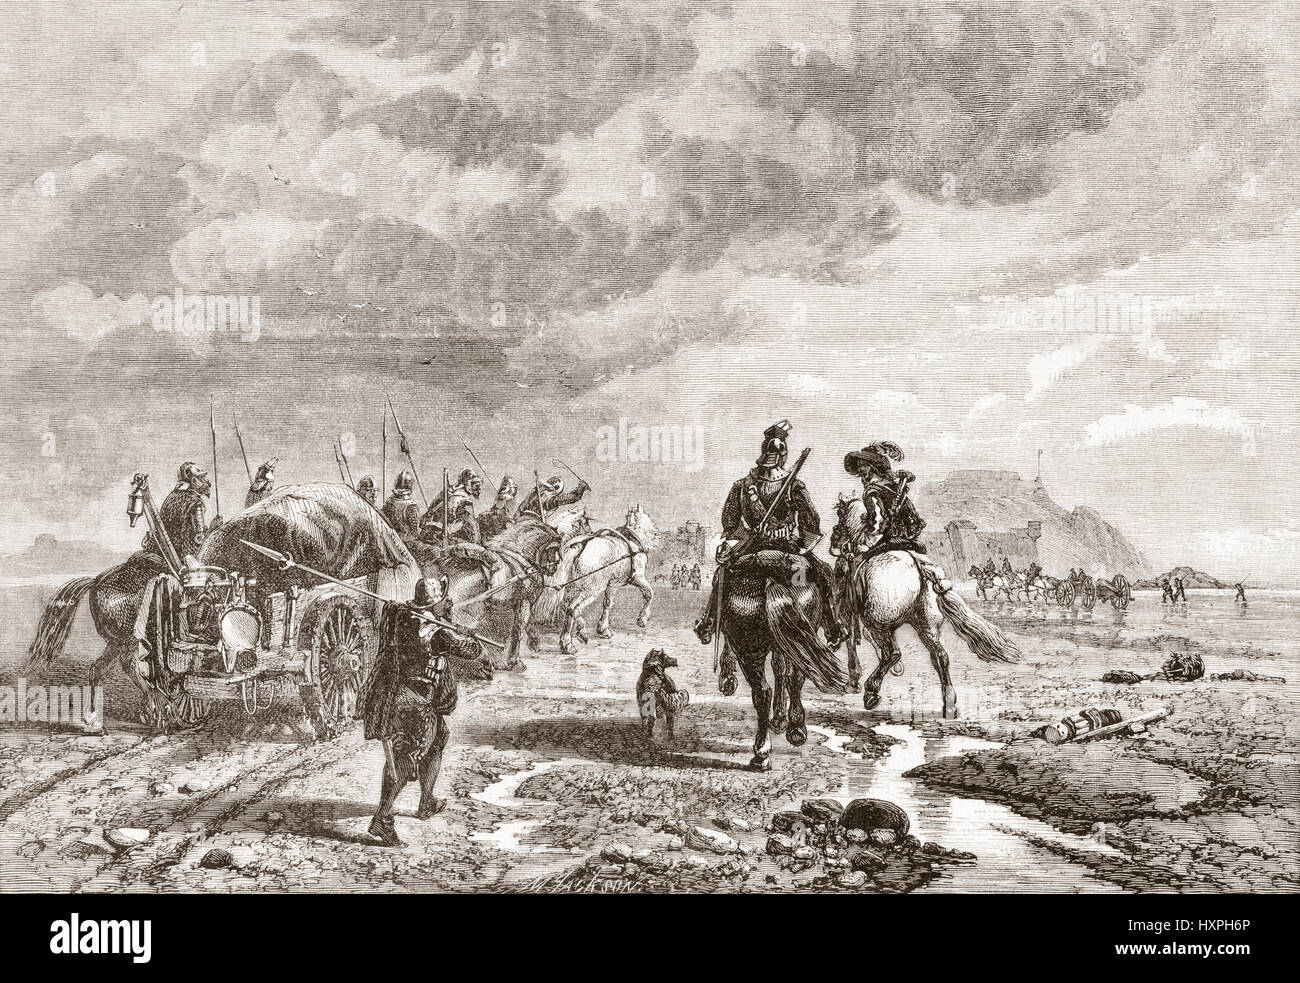 Convoy militar francés aprovechando la marea baja para ir de Jersey a Fort Elizabeth antes de la batalla de Jersey en 1781 durante la guerra anglo-francesa. A partir de l'Univers Illustre publicado 1867. Foto de stock